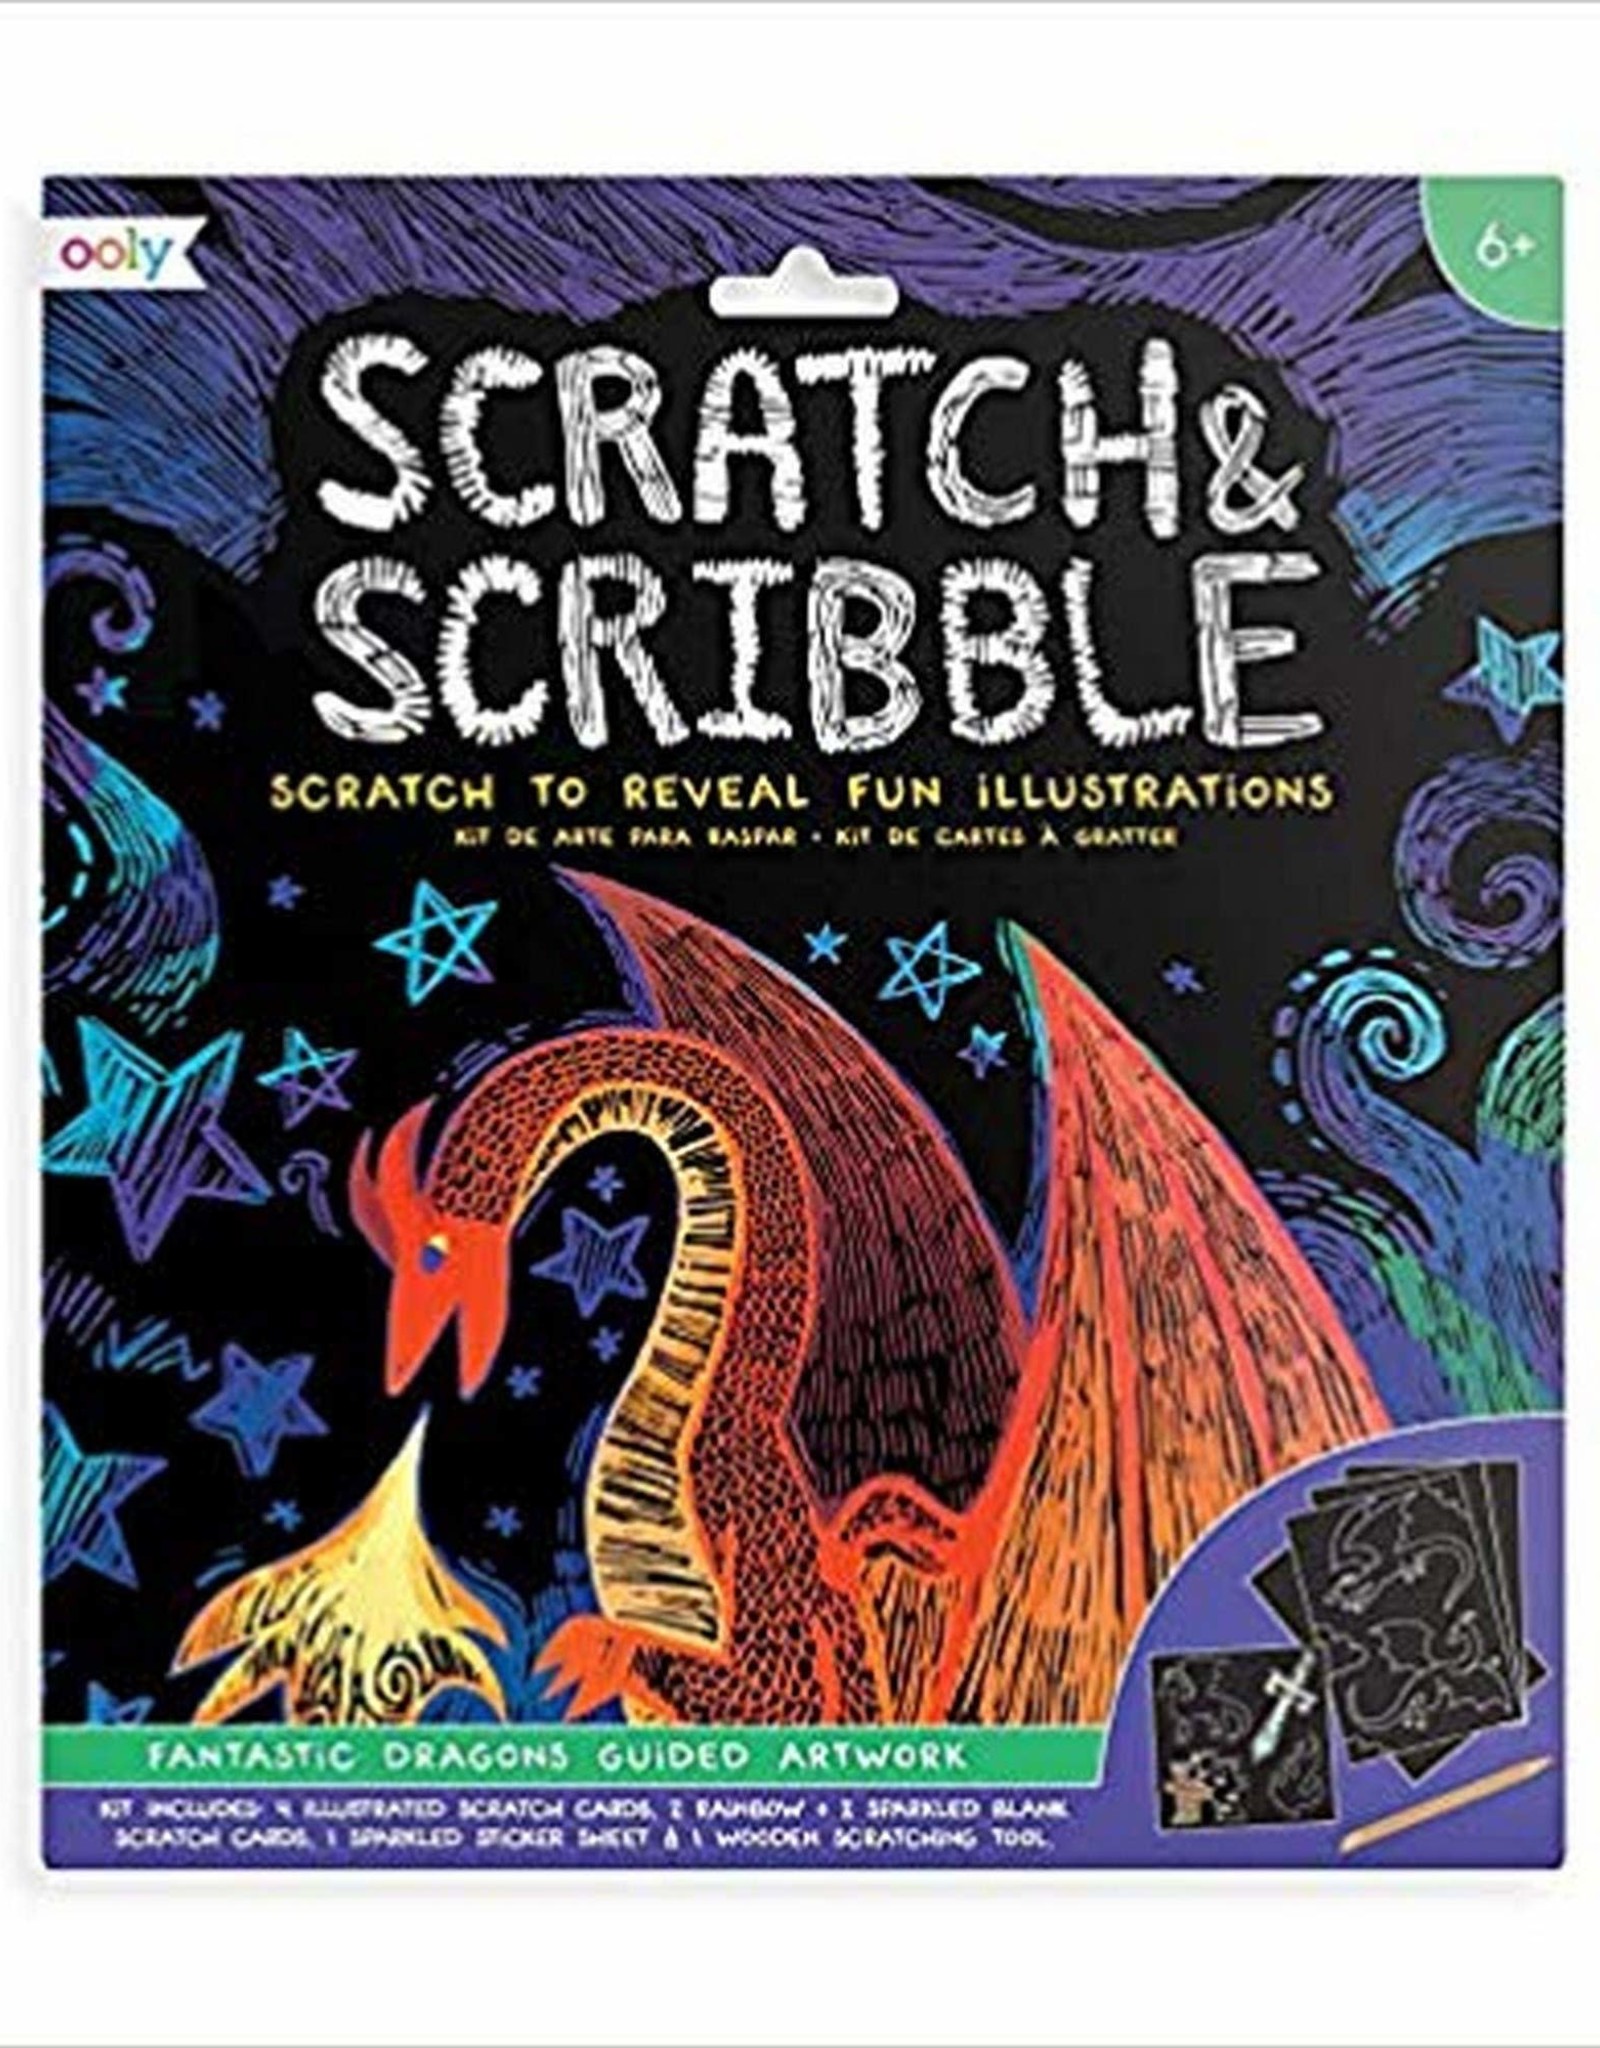 OOLY SCRATCH & SCRIBBLE ART KIT - FANTASTIC DRAGON - 10 PC SET